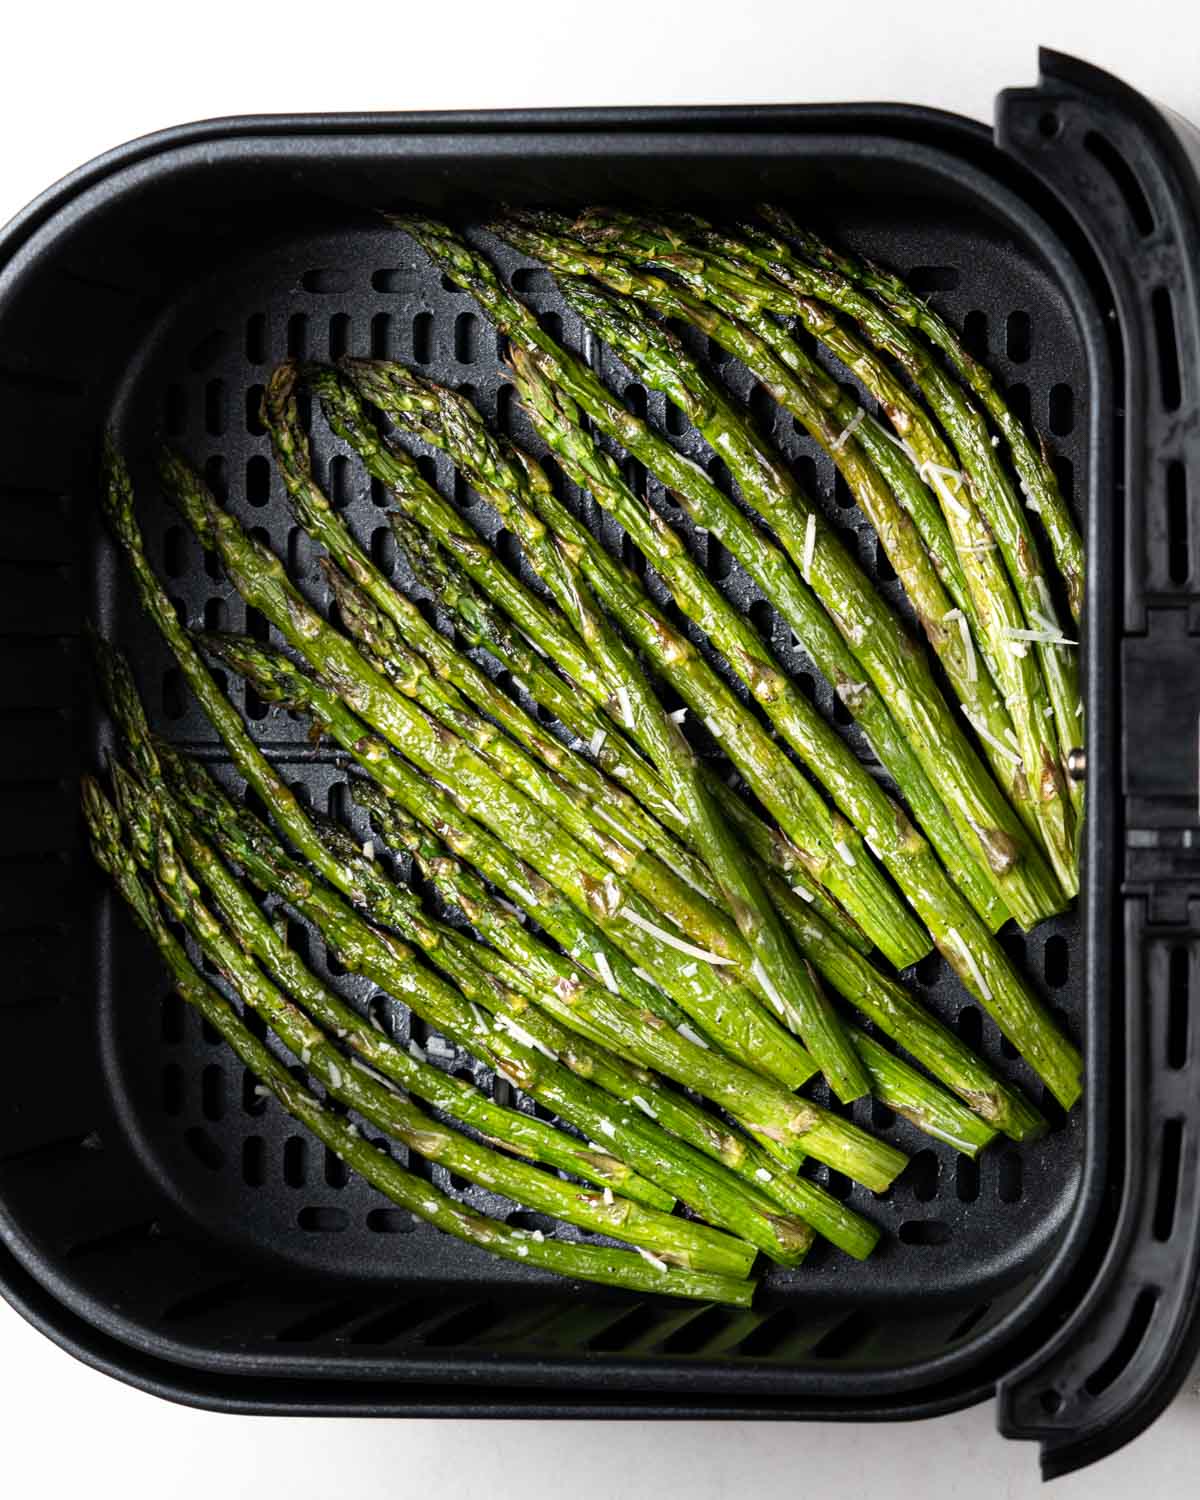 air fried asparagus in air fryer basket.